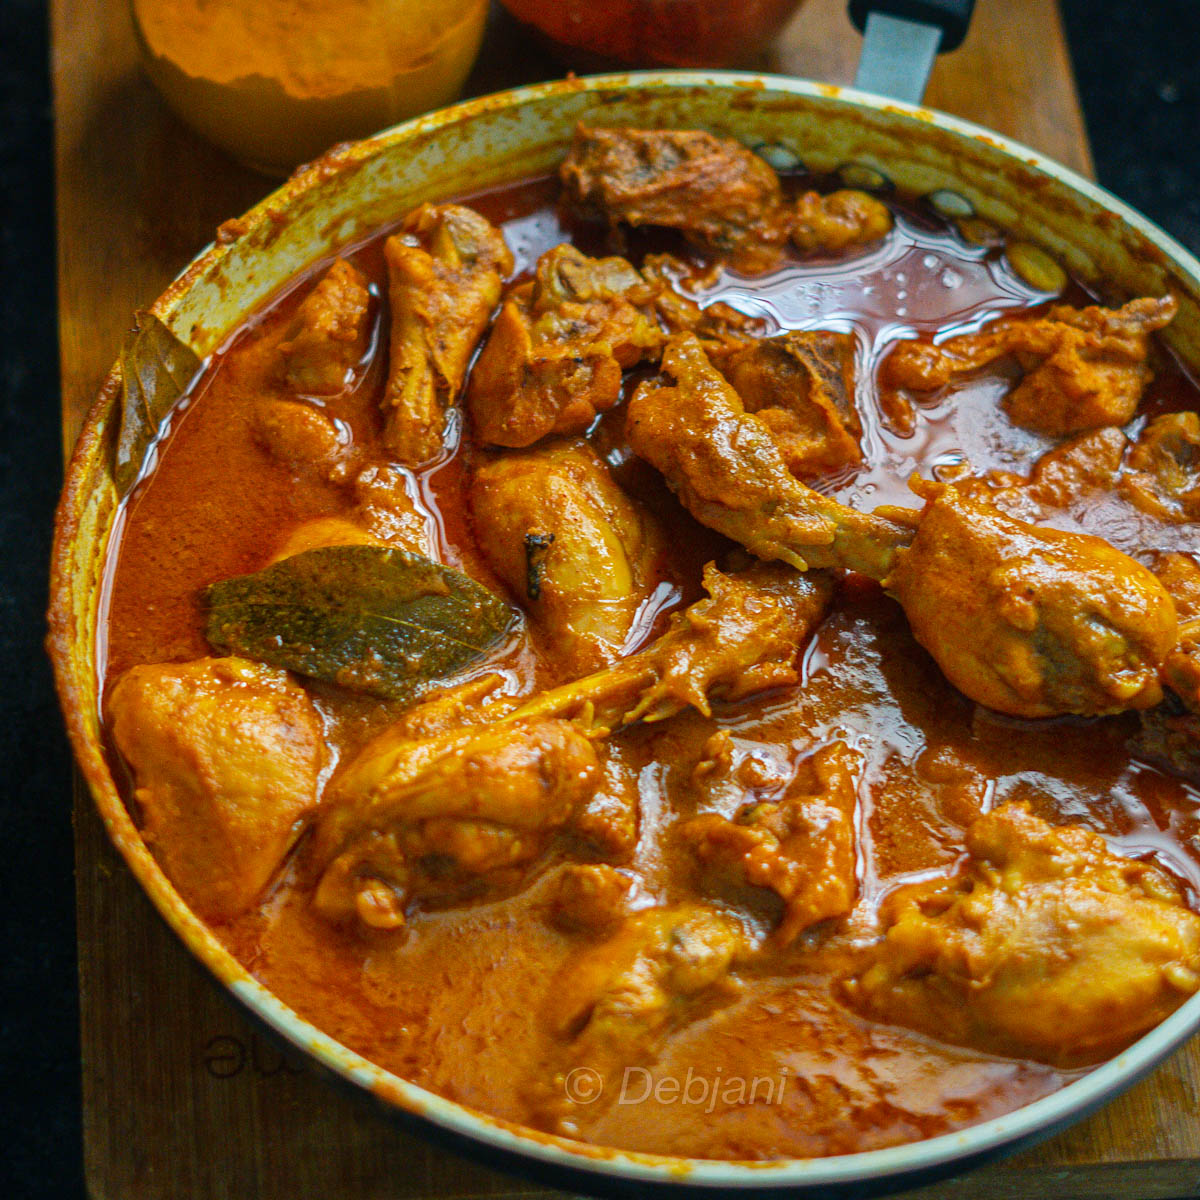 %easy indian chicken curry Recipe for beginners Debjanir rannaghar